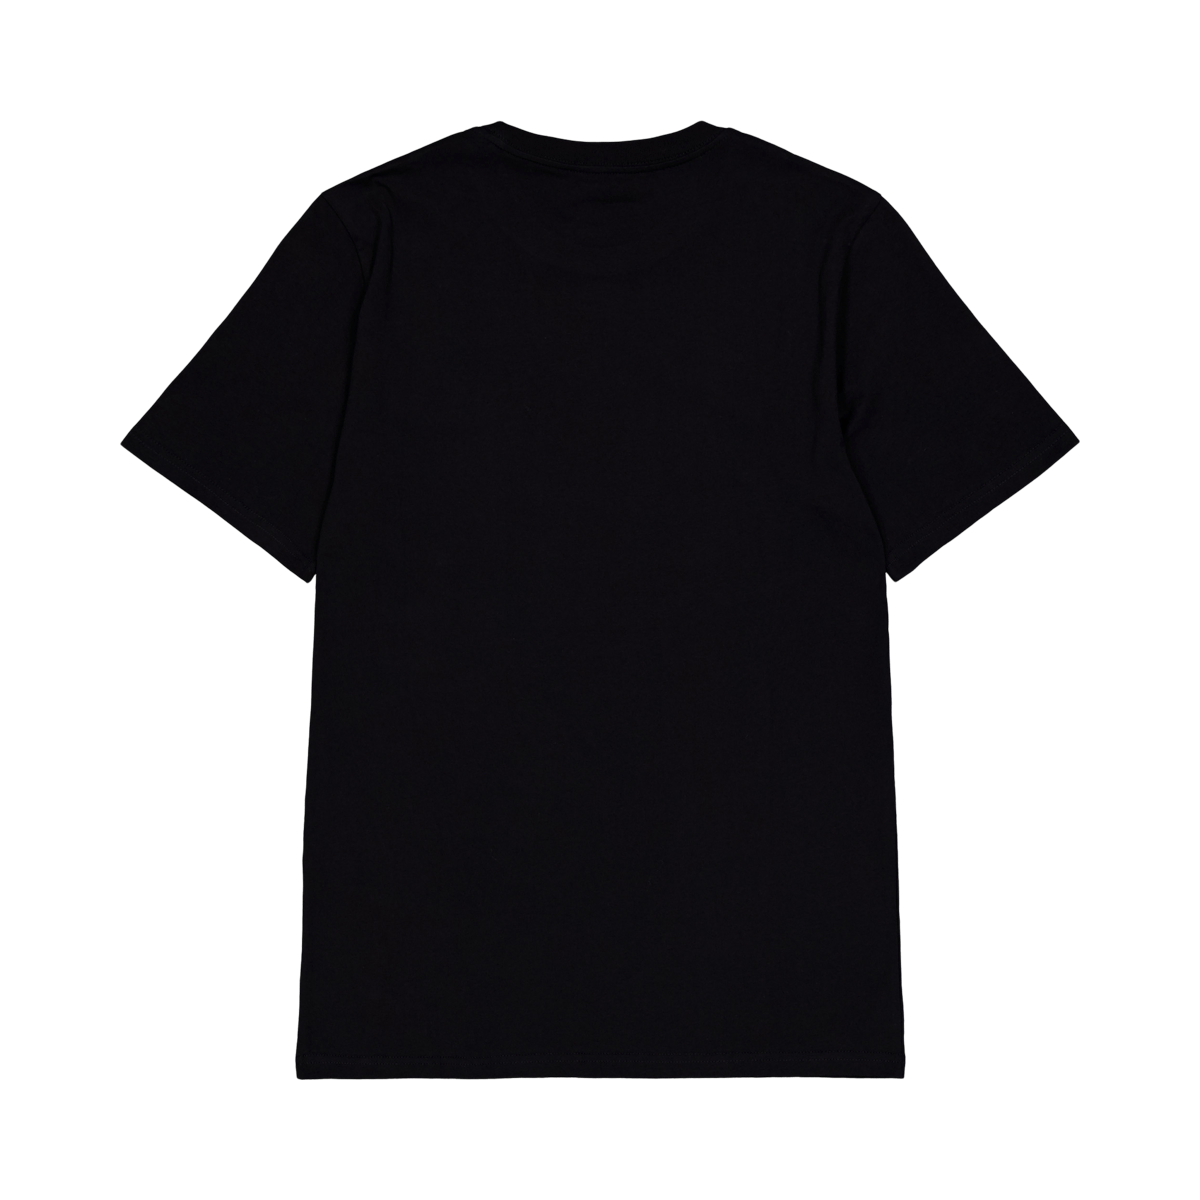 S/s Pocket T-shirt Black